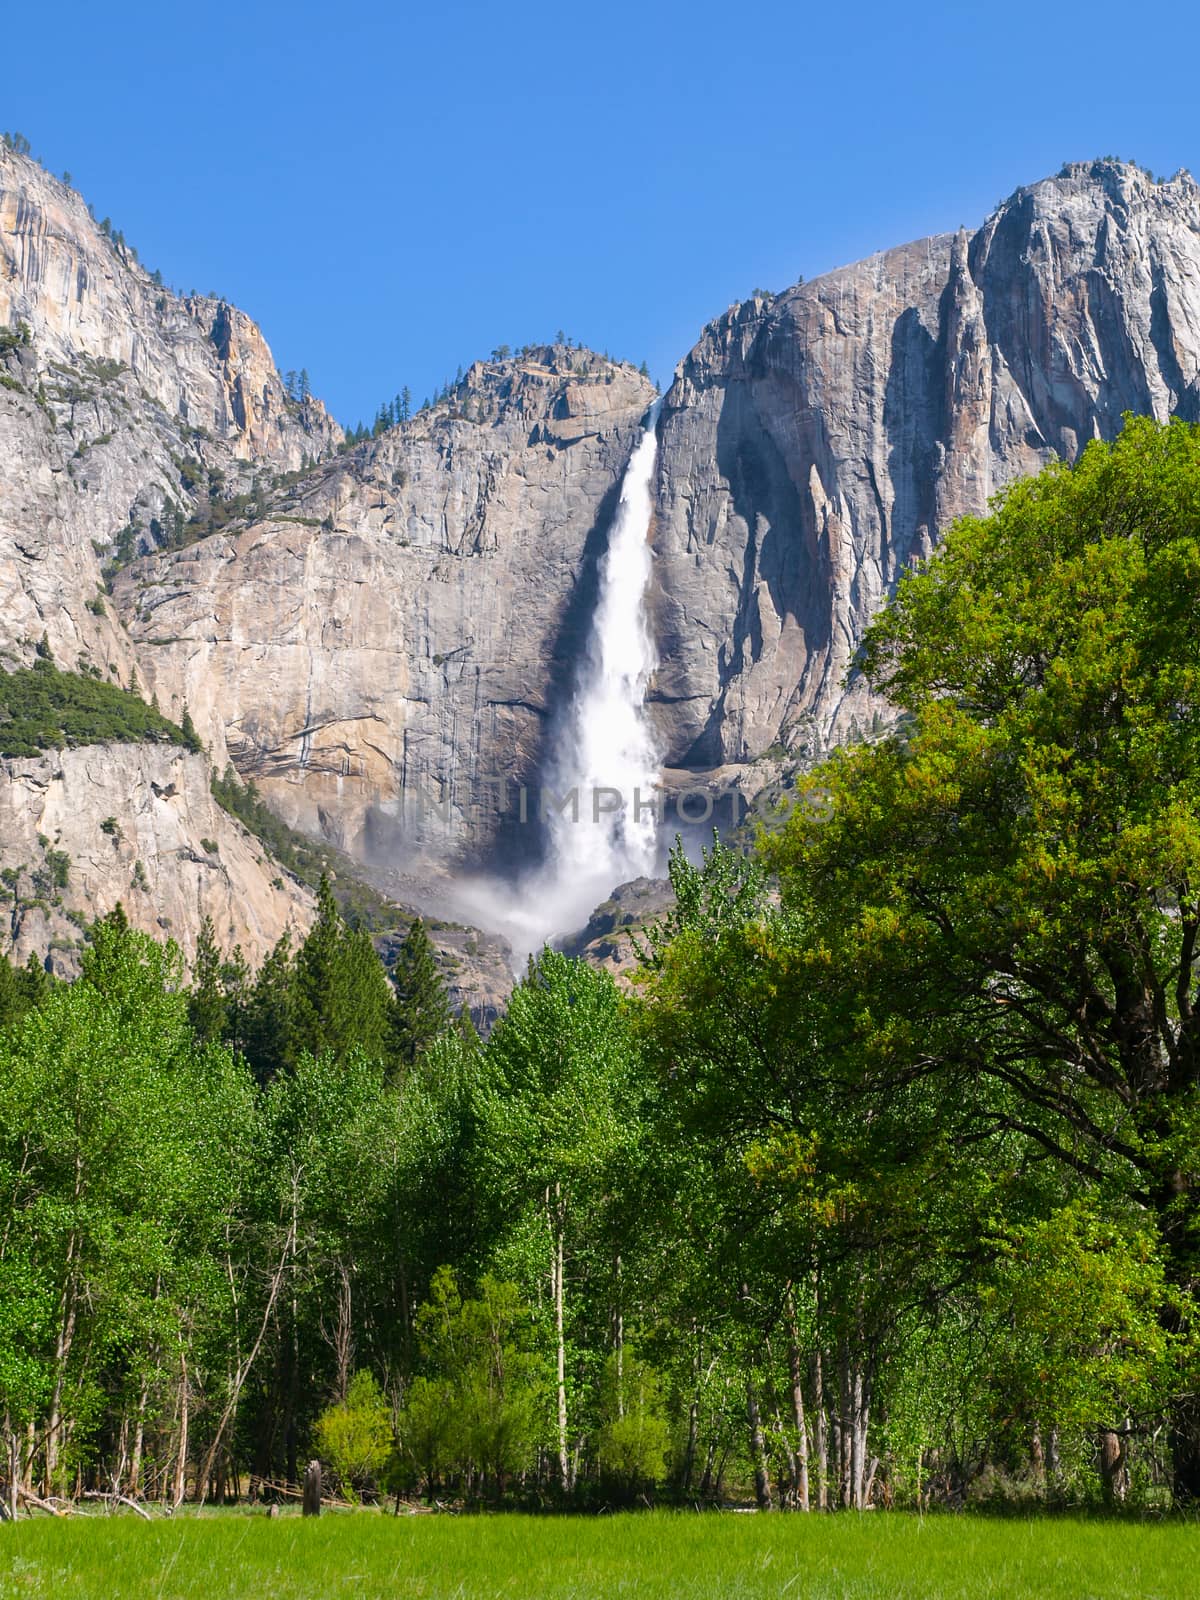 Upper Yosemite Fall by pyty